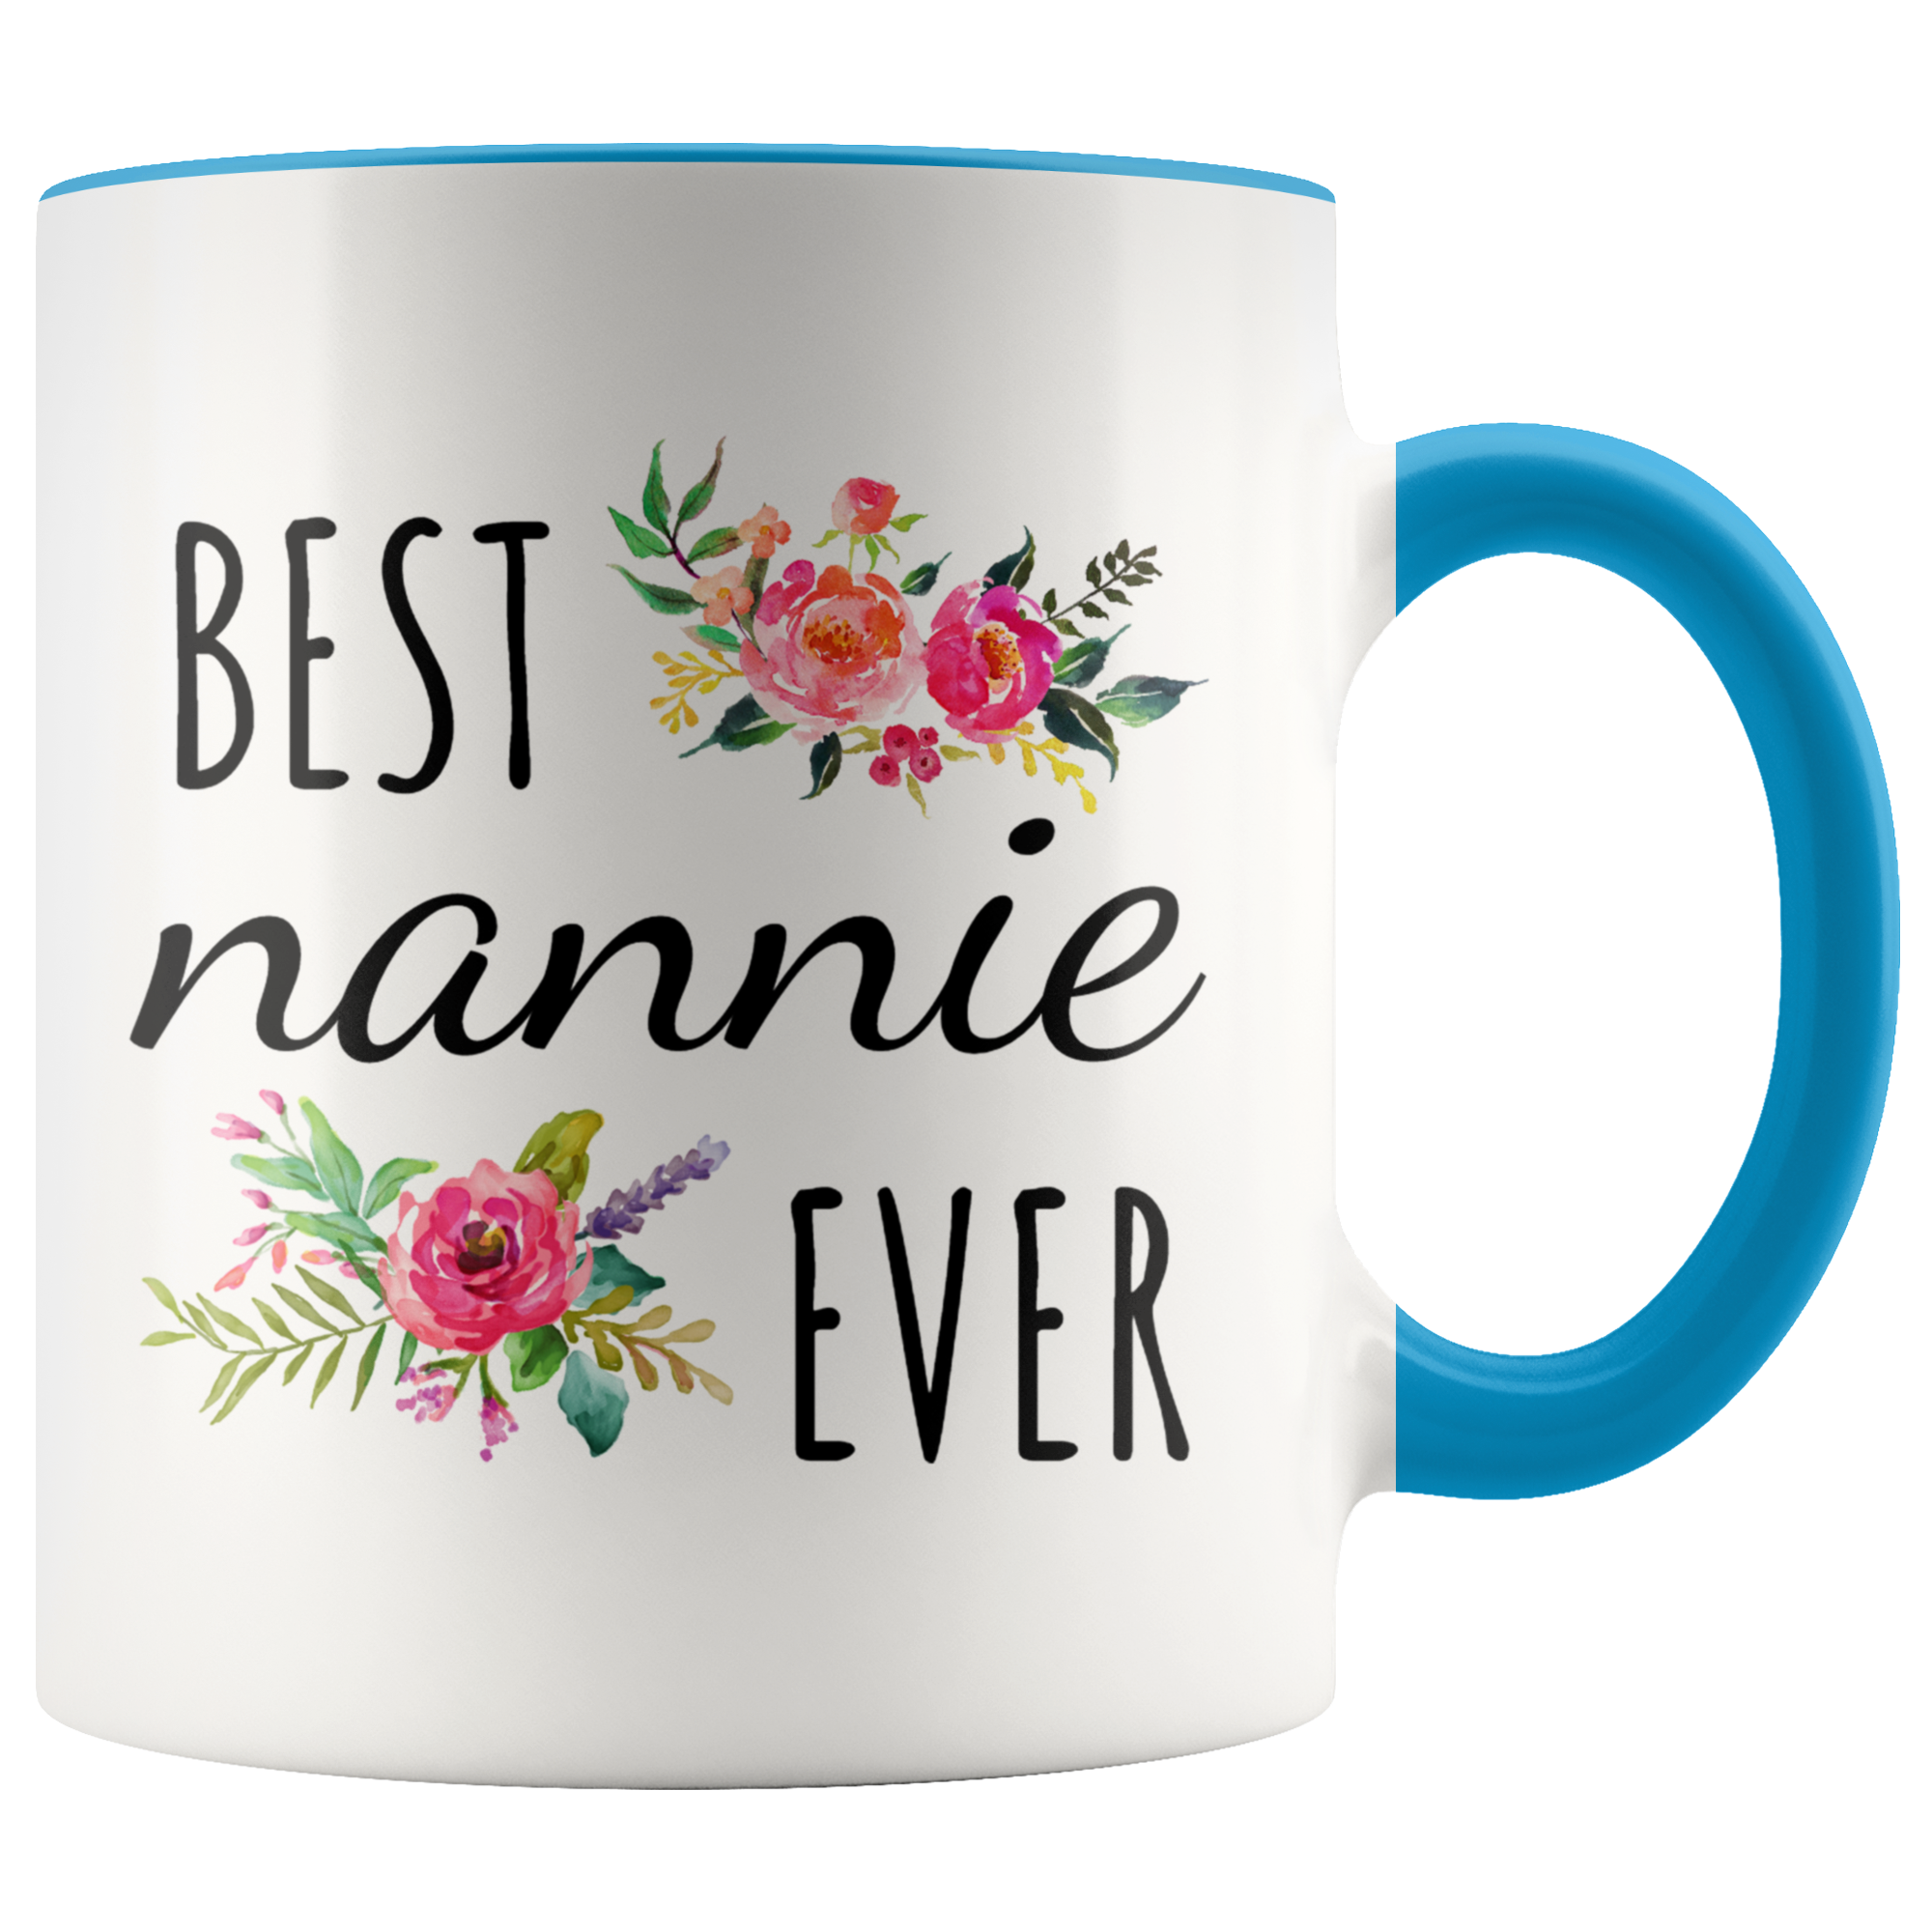 Best Nannie Mug